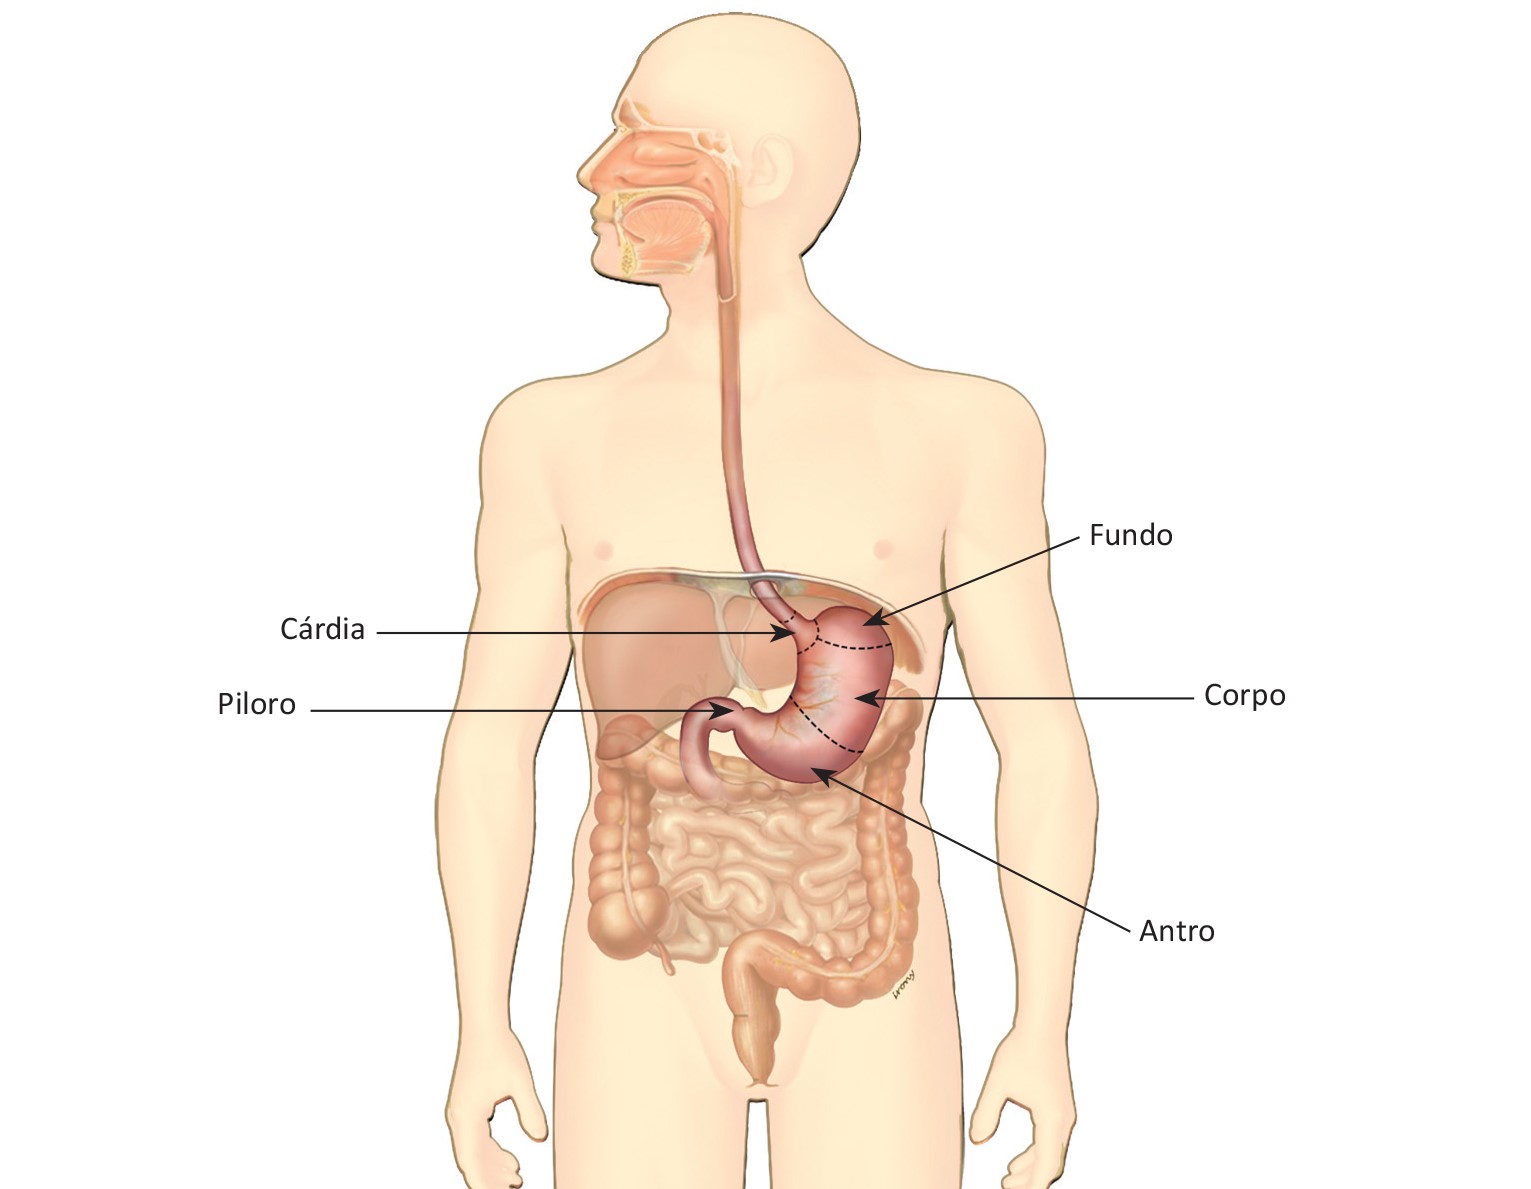 Cancer gastrico peritoneal. Chimioterapia hipertermică (HIPEC) | Anadolu Medical Center